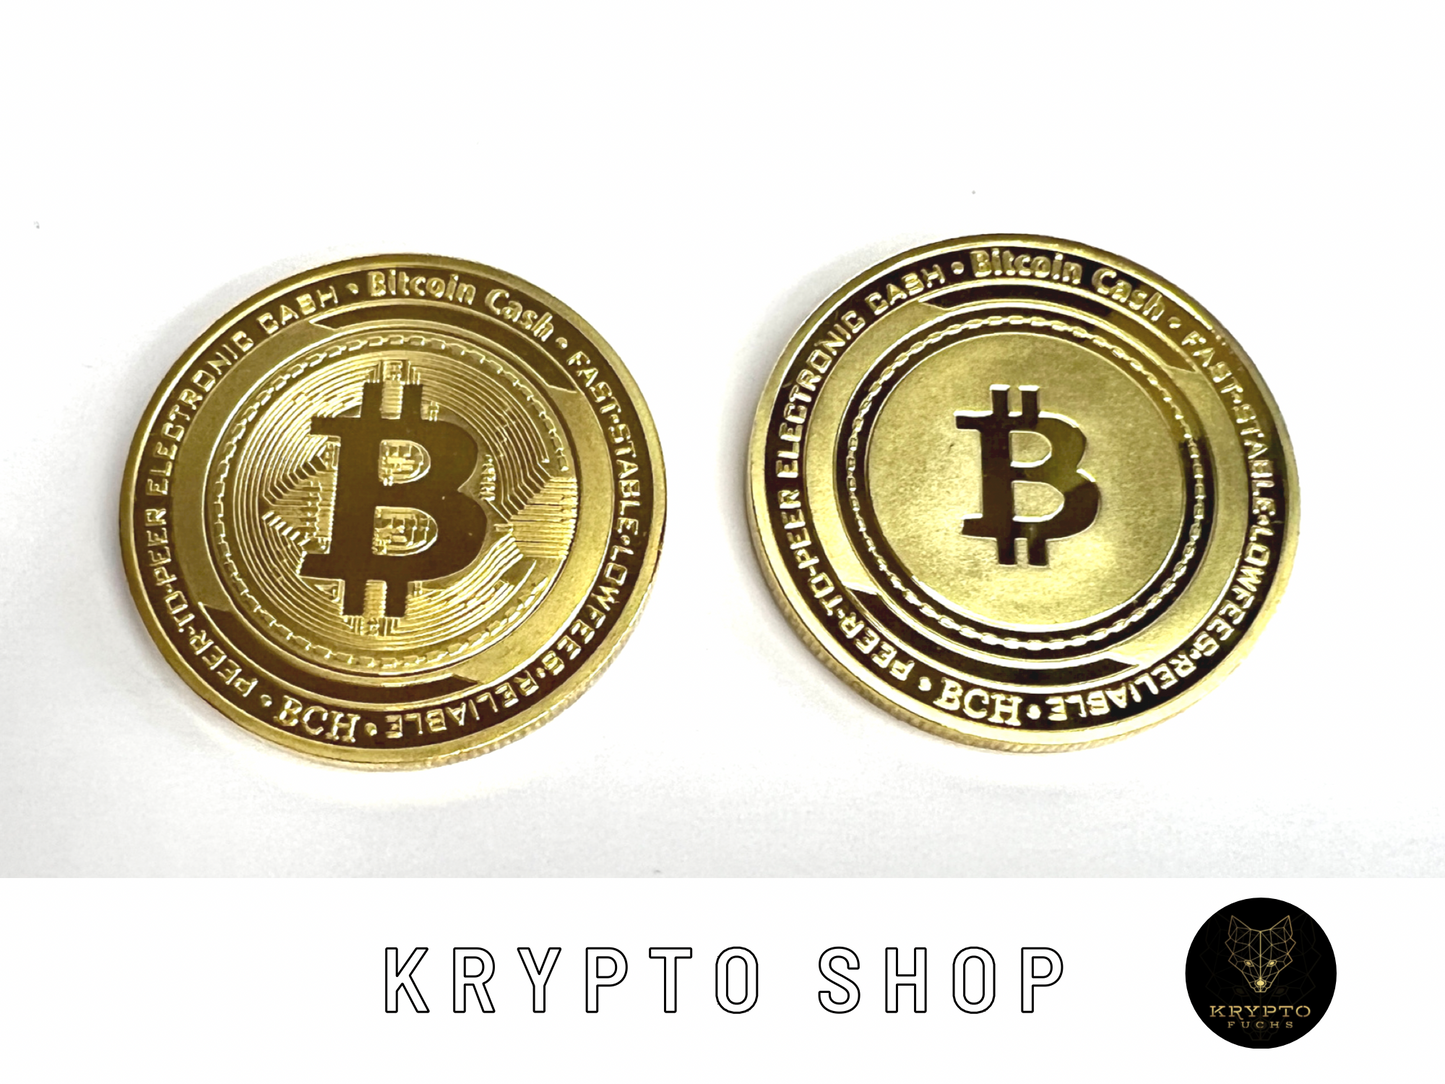 Bitcoin Cash BTH Kryptomünze